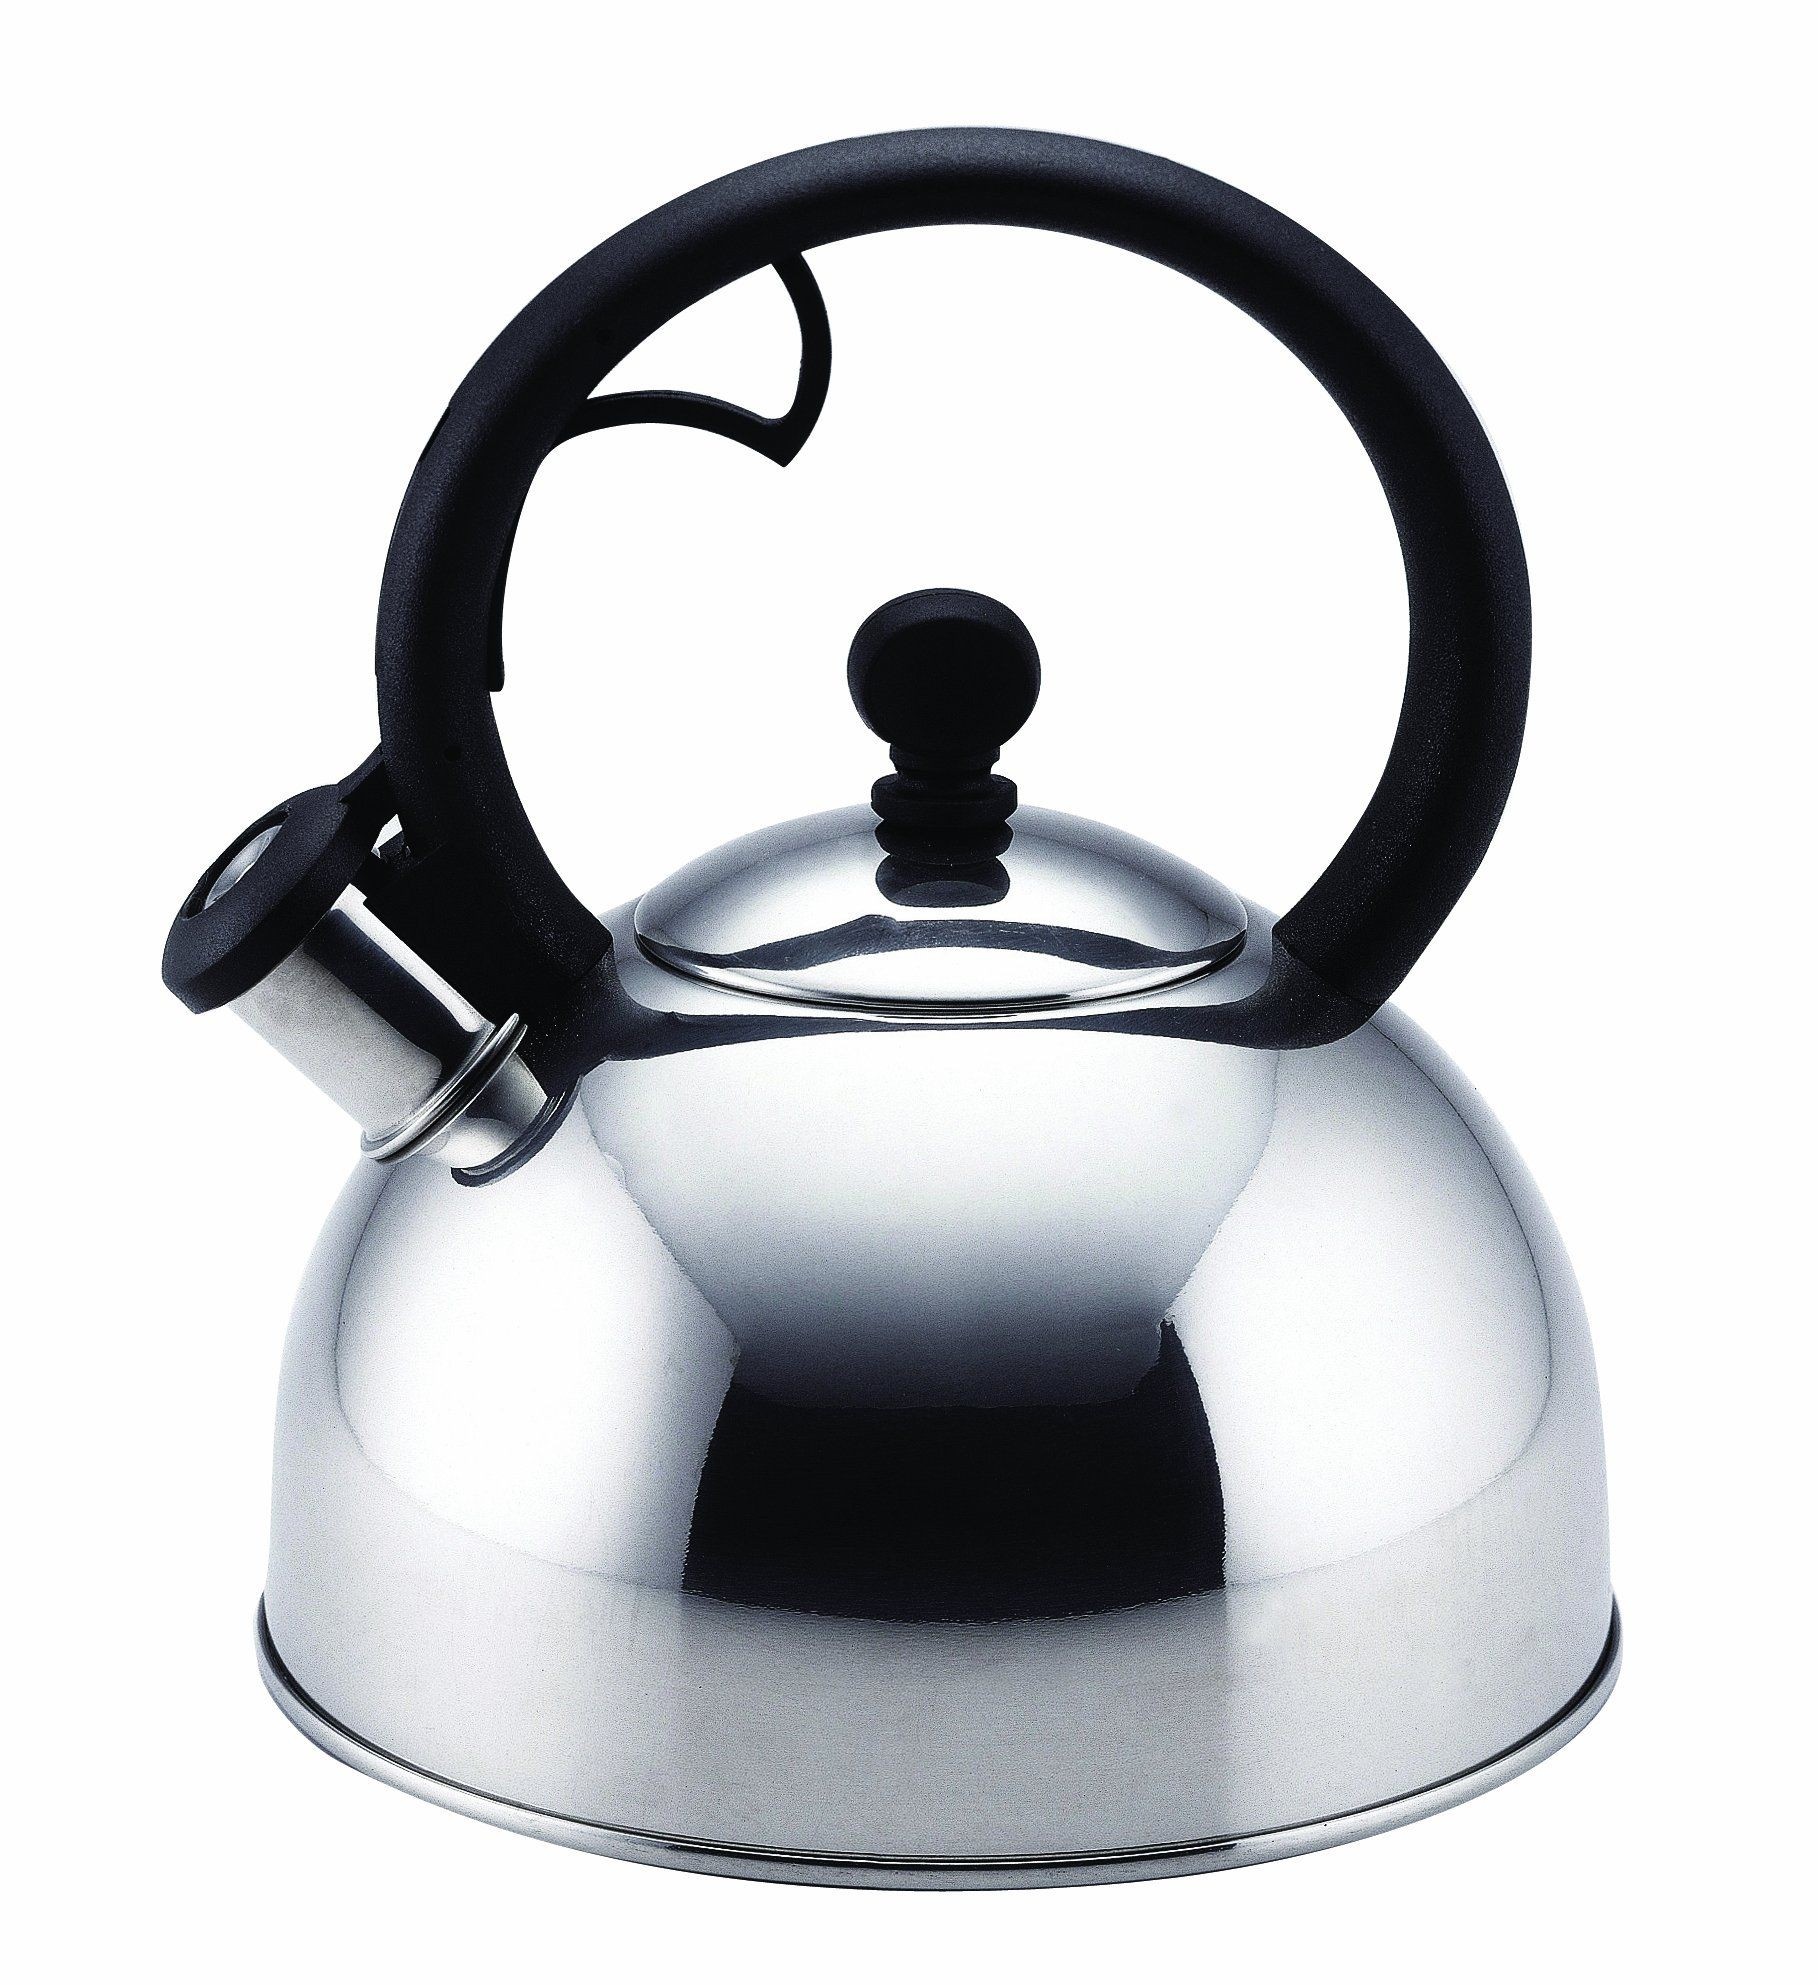 Best tea kettles made in usa